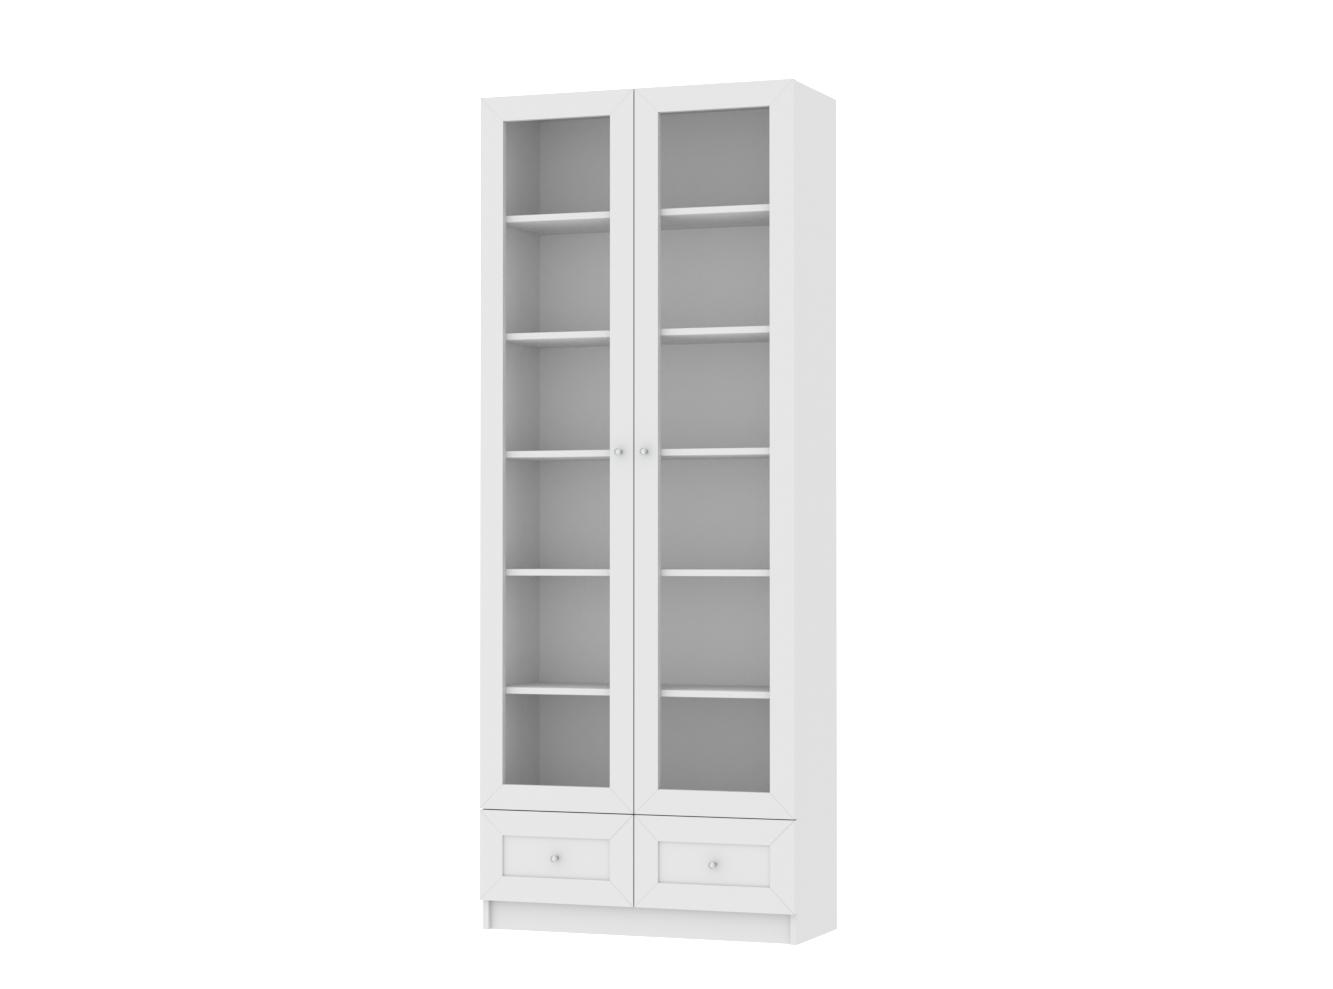  Книжный шкаф Билли 315 white ИКЕА (IKEA) изображение товара